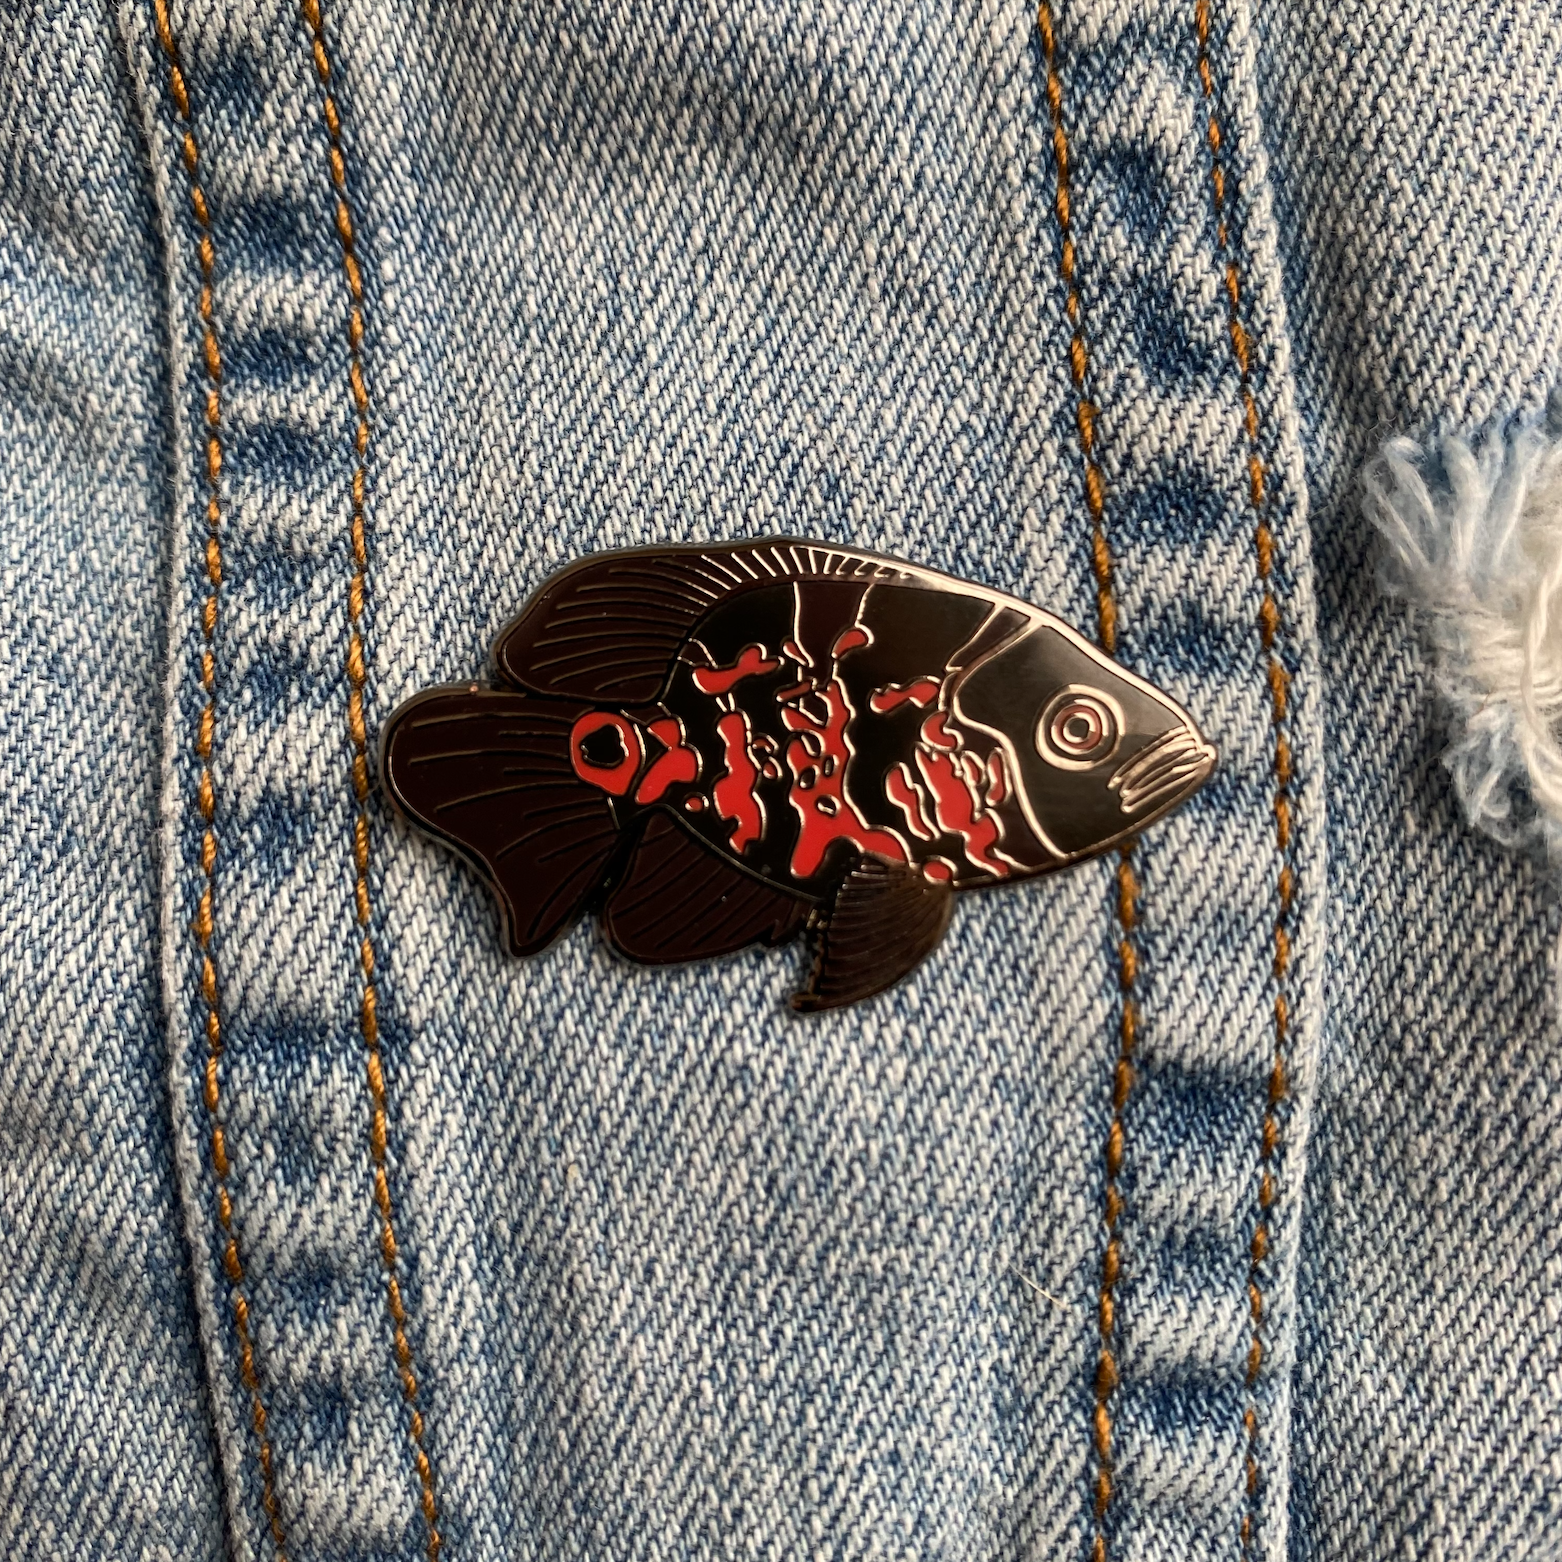 Tiger oscar cichlid hard enamel pin. Black, gray and orange fish pin.